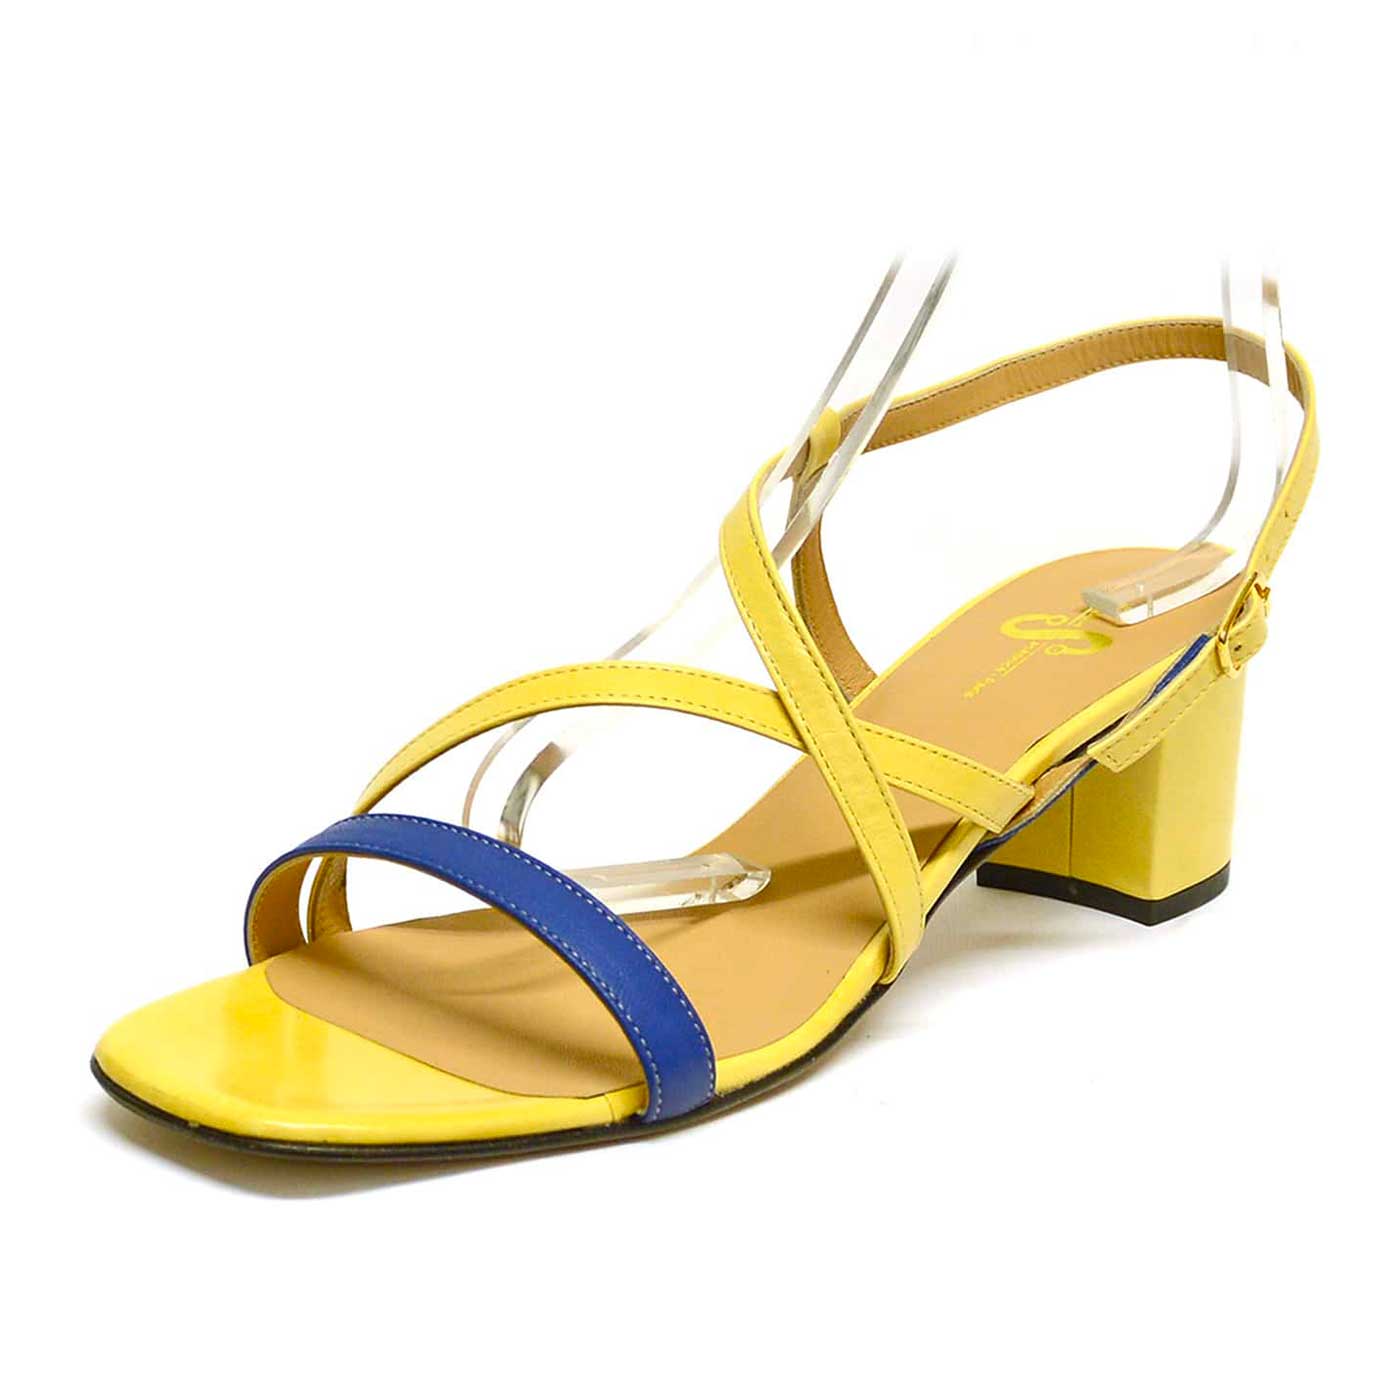 sandales cuir lisse bleu jaune, chaussures femme grande taille